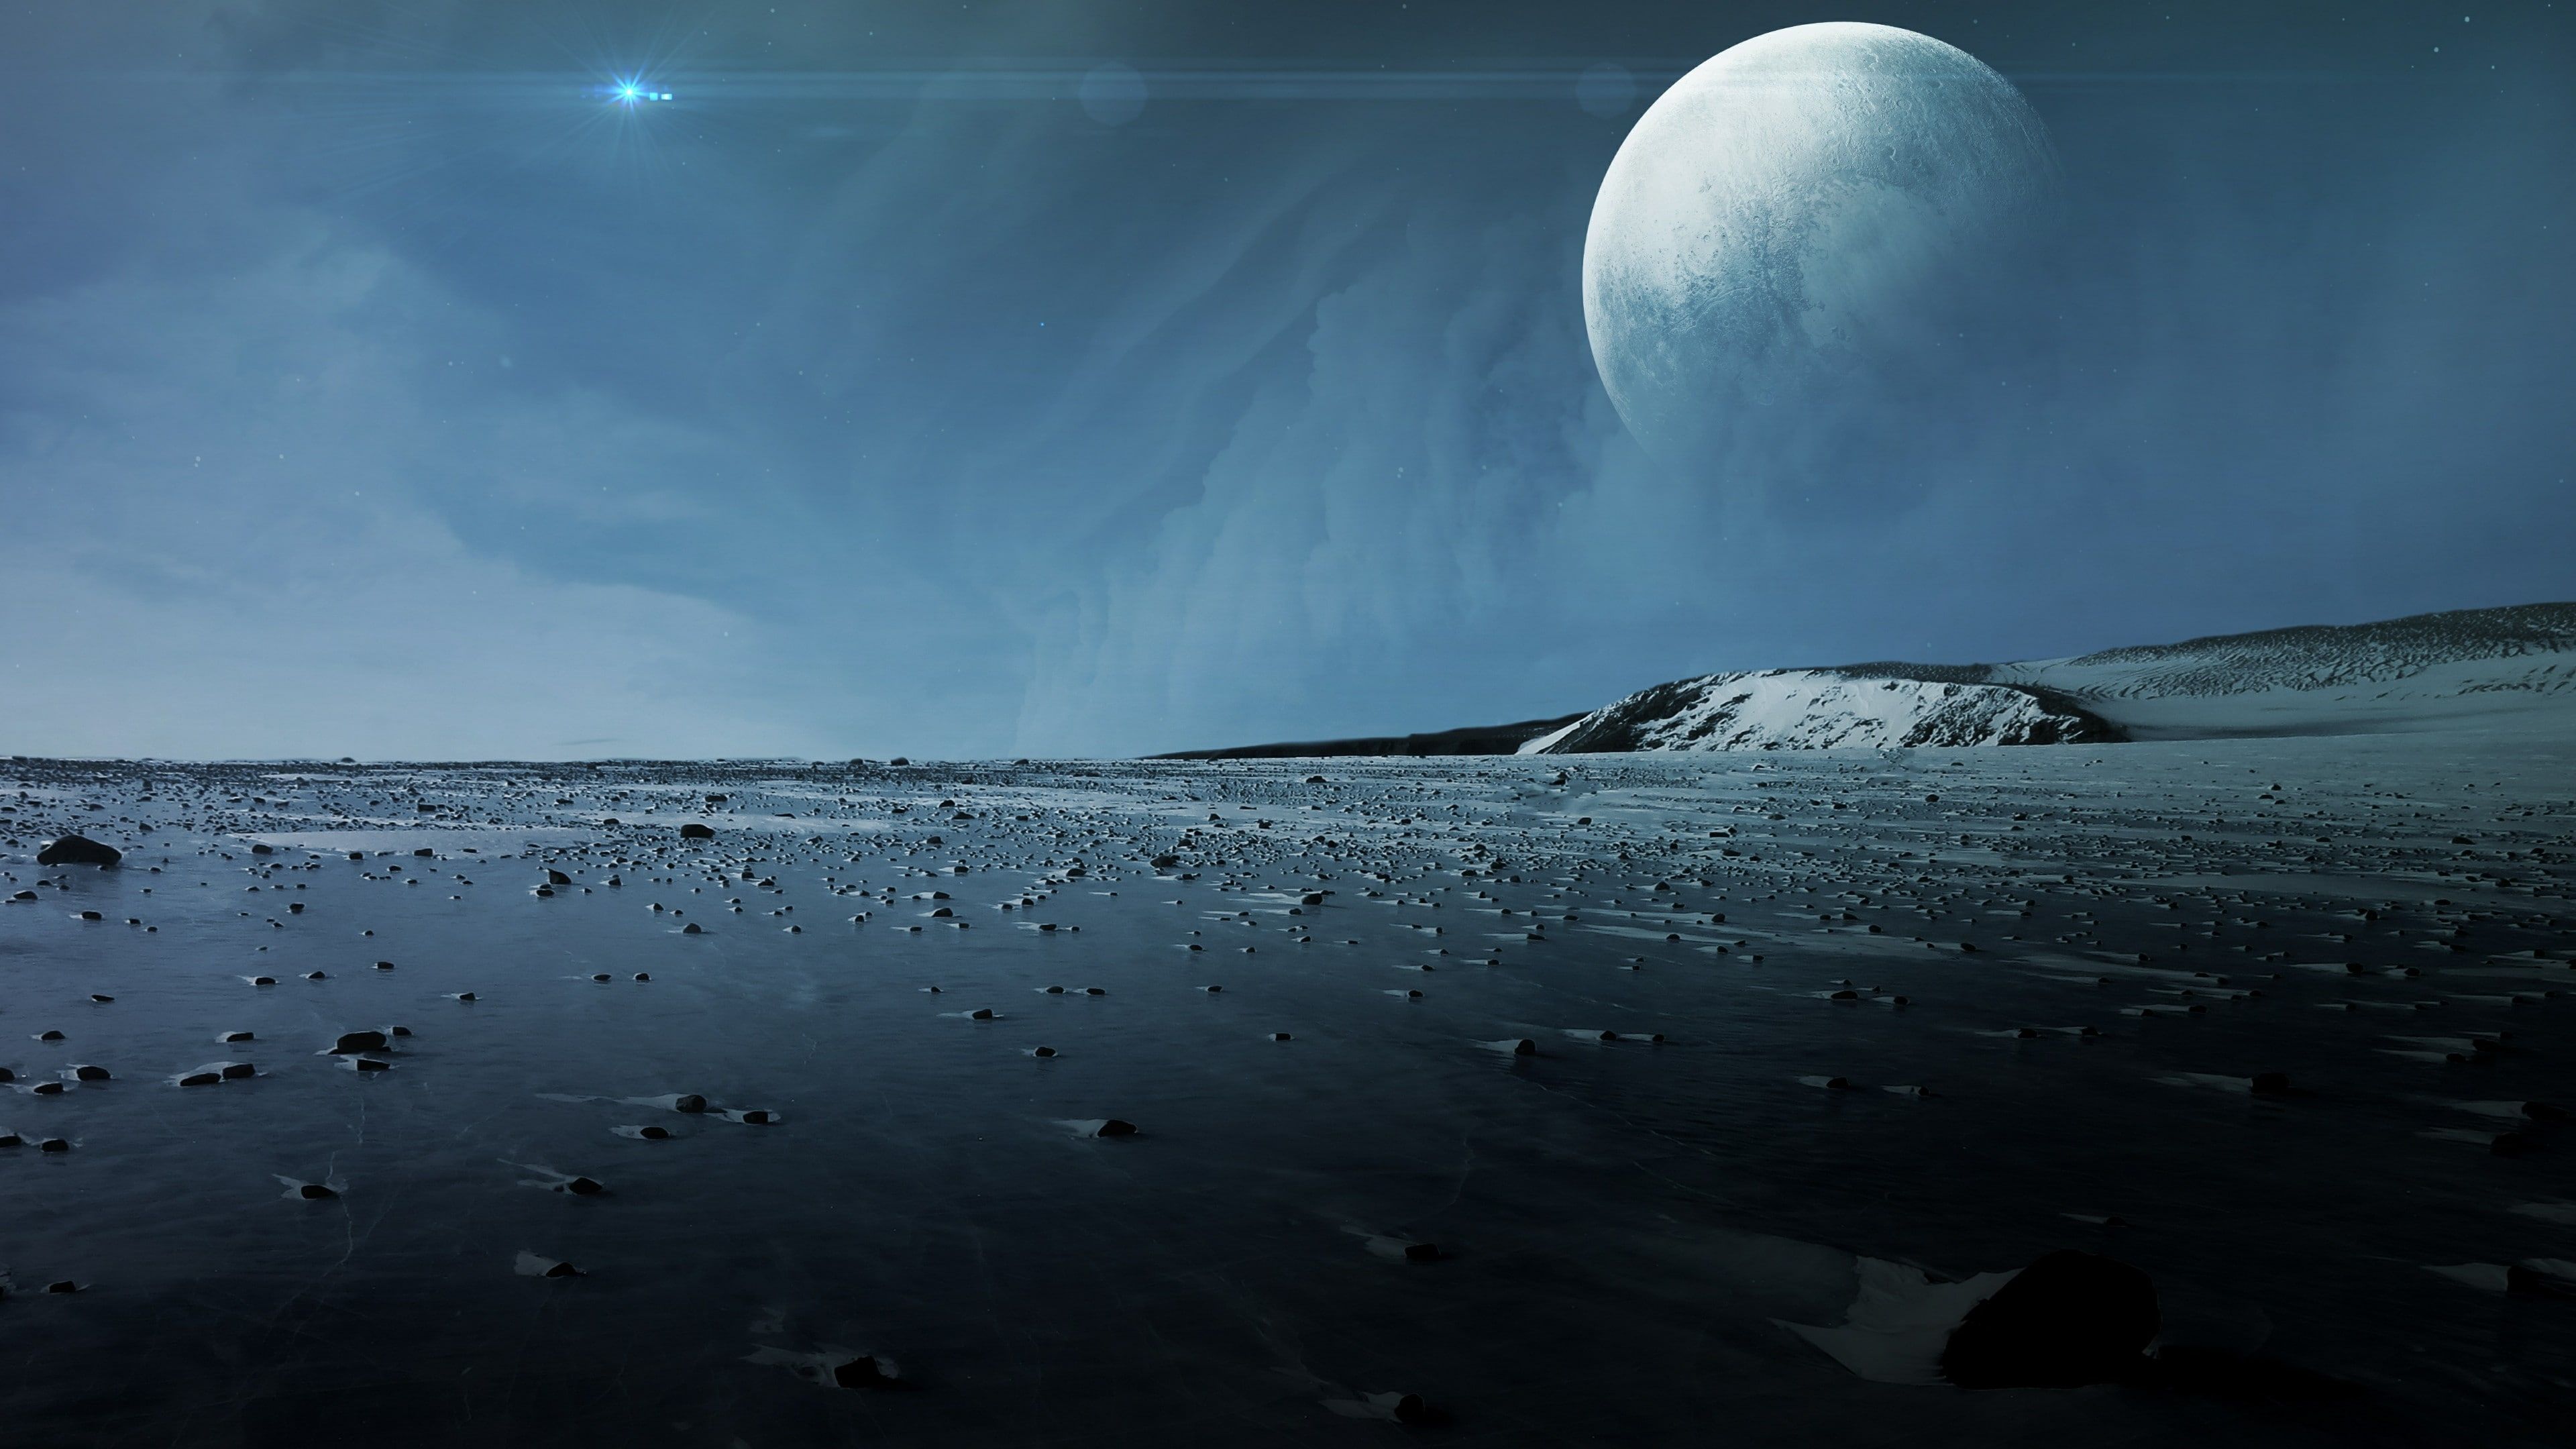 planet #sky #moon #ice #surface alien planet fantasy landscape #landscape #horizon K #wallpaper #hdwallpaper #desktop. Fantasy landscape, Alien planet, Planets